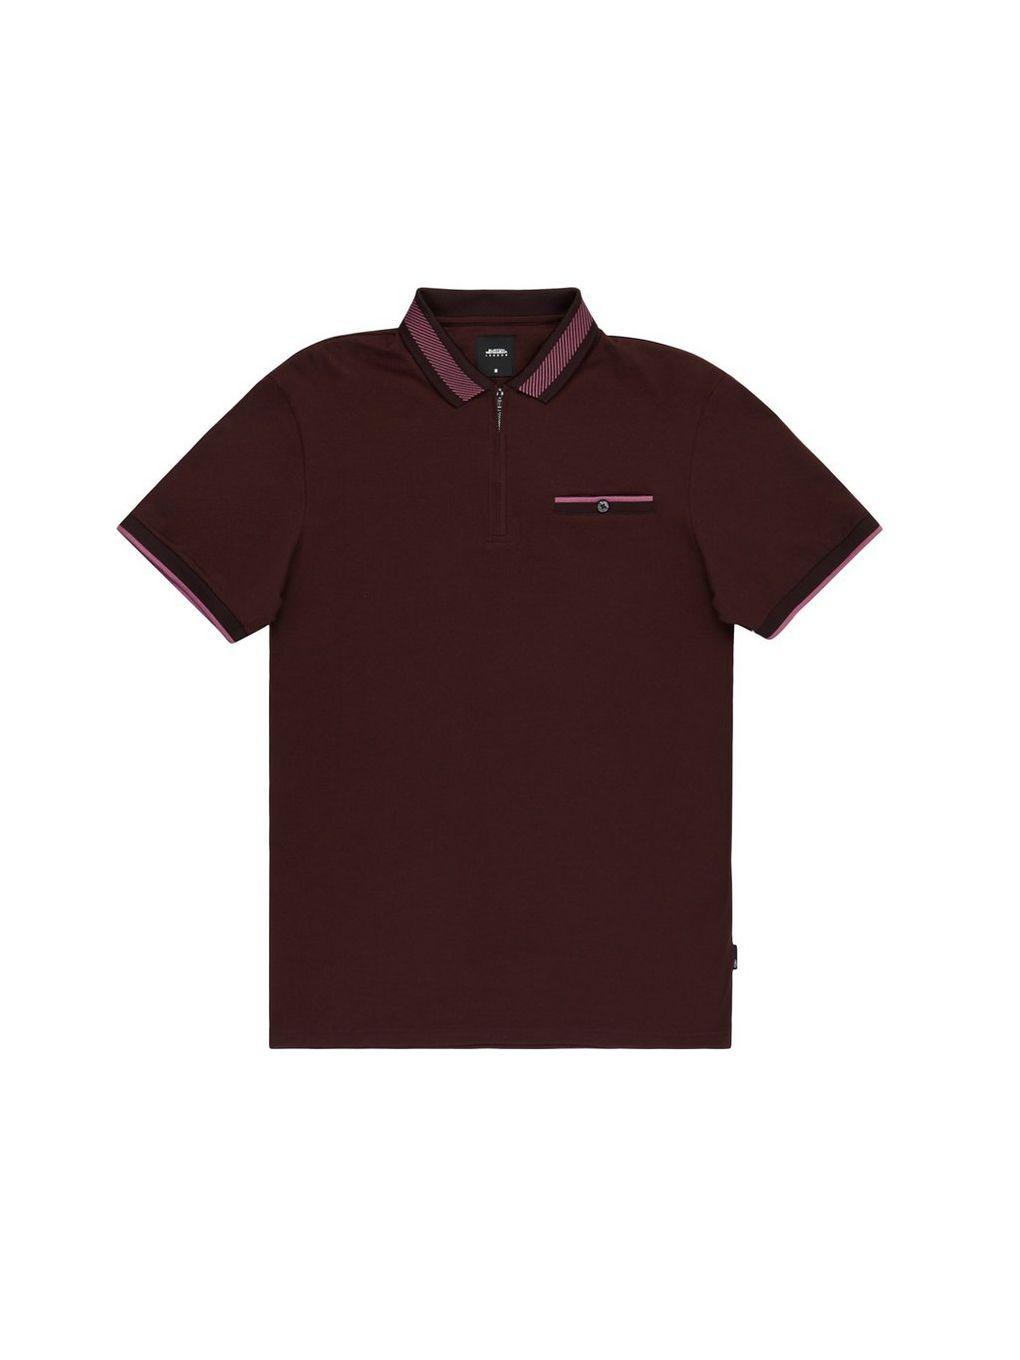 Maroon Polo Logo - Burgundy Bold Tipped Zip Neck Polo Shirt - Burton Menswear